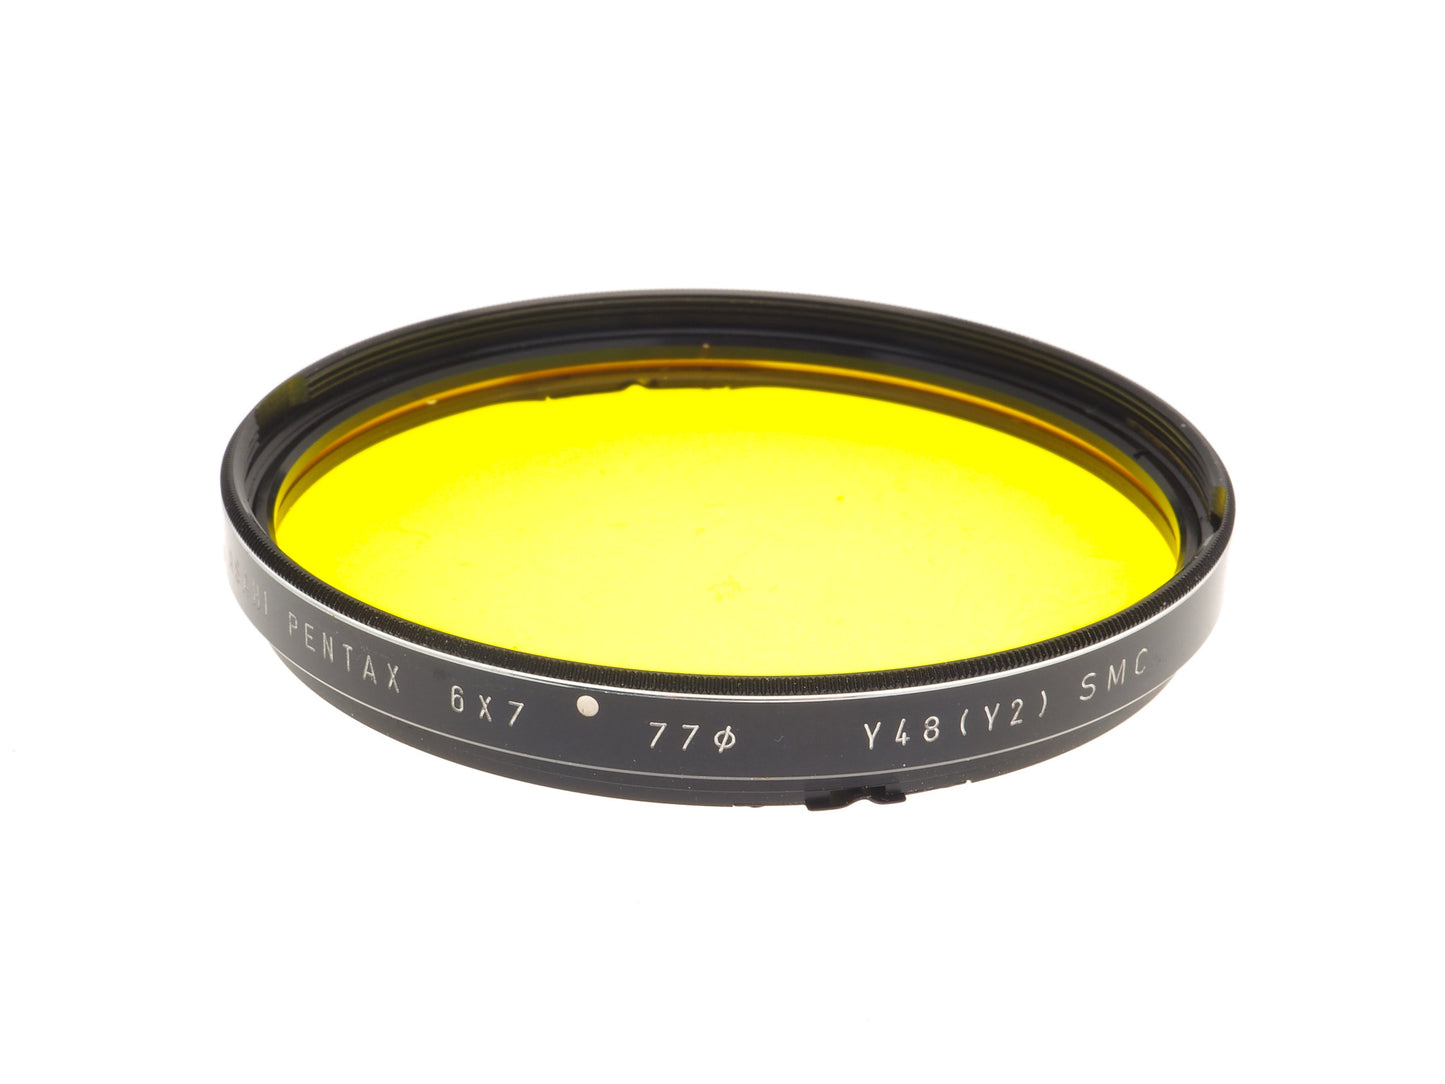 Pentax 77mm 6x7 Yellow Y48 (Y2) SMC Filter - Accessory